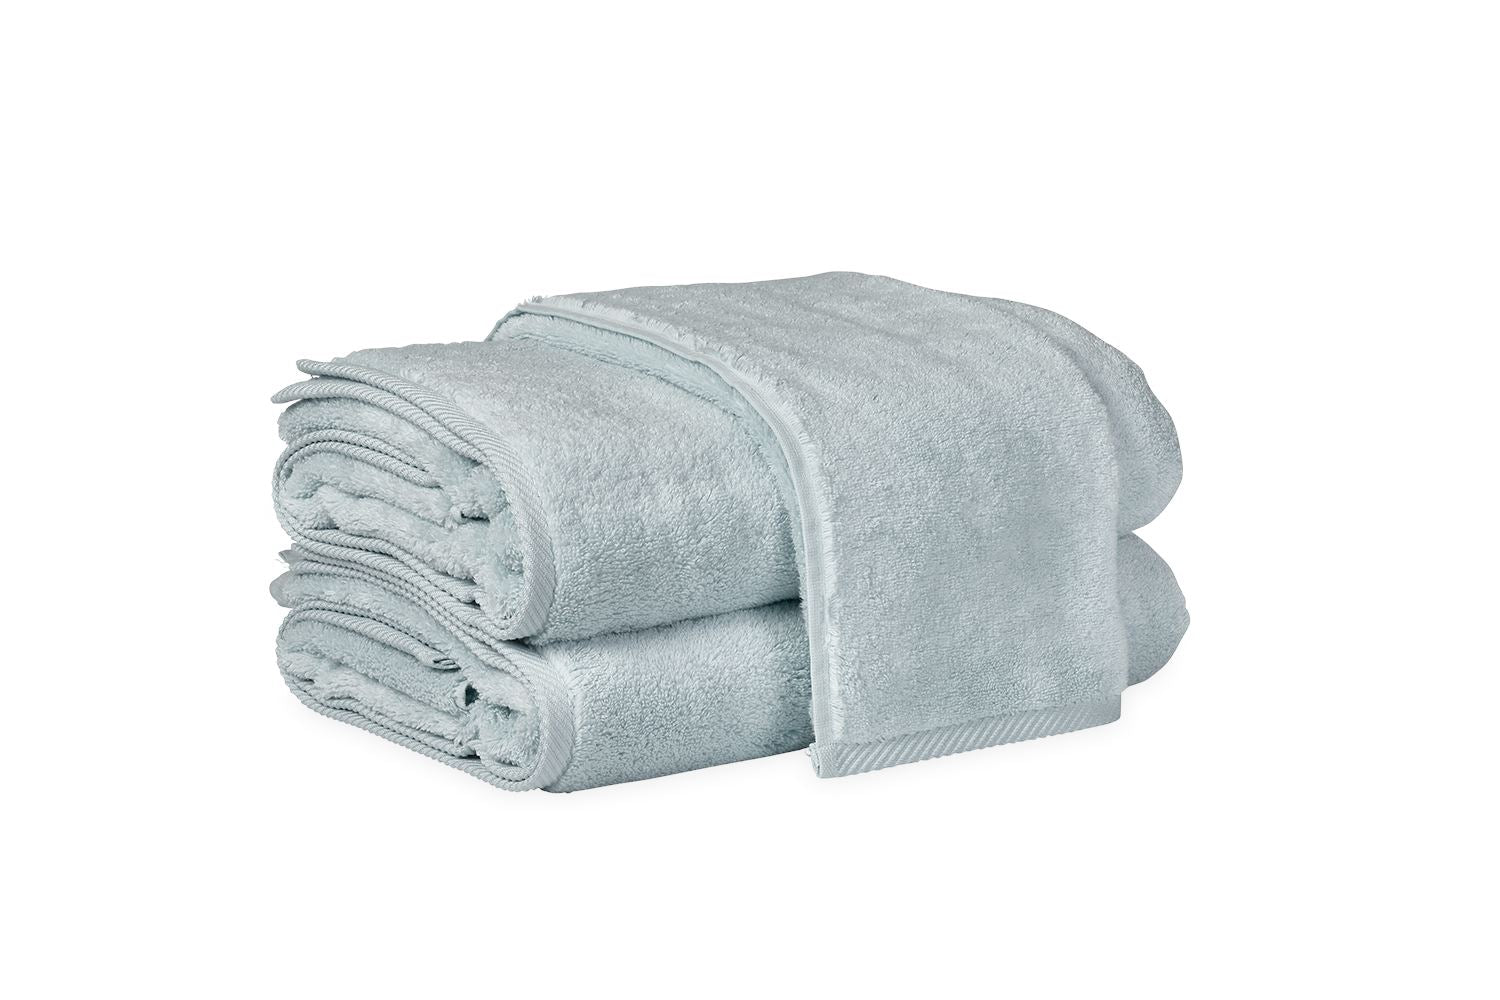 Matouk Milagro Bath Towel - Charcoal